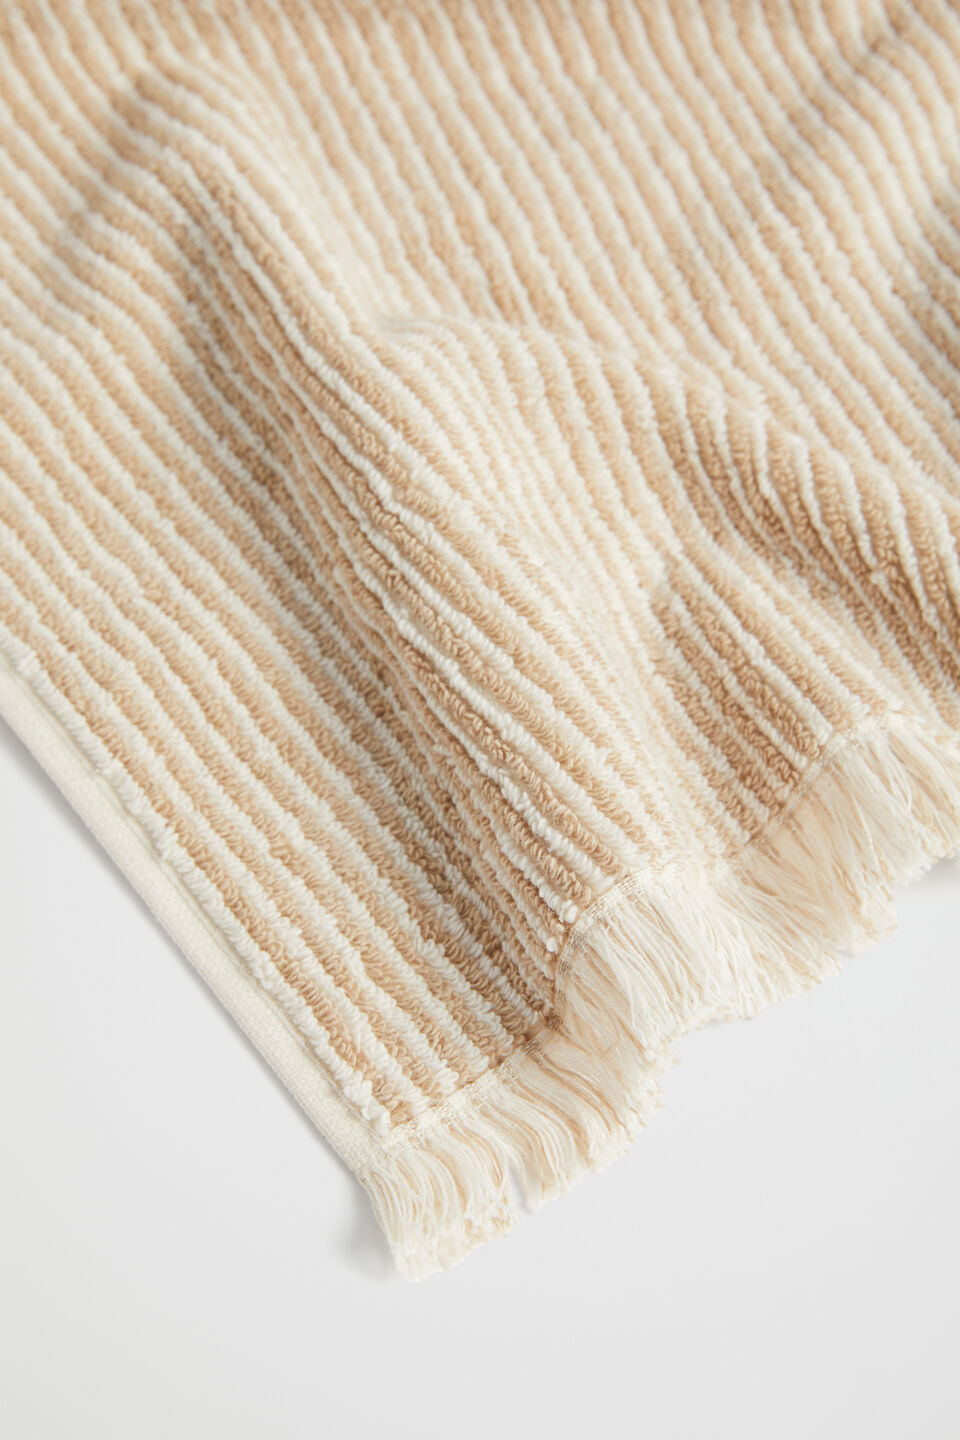 Stripe Textured Towel  Stone